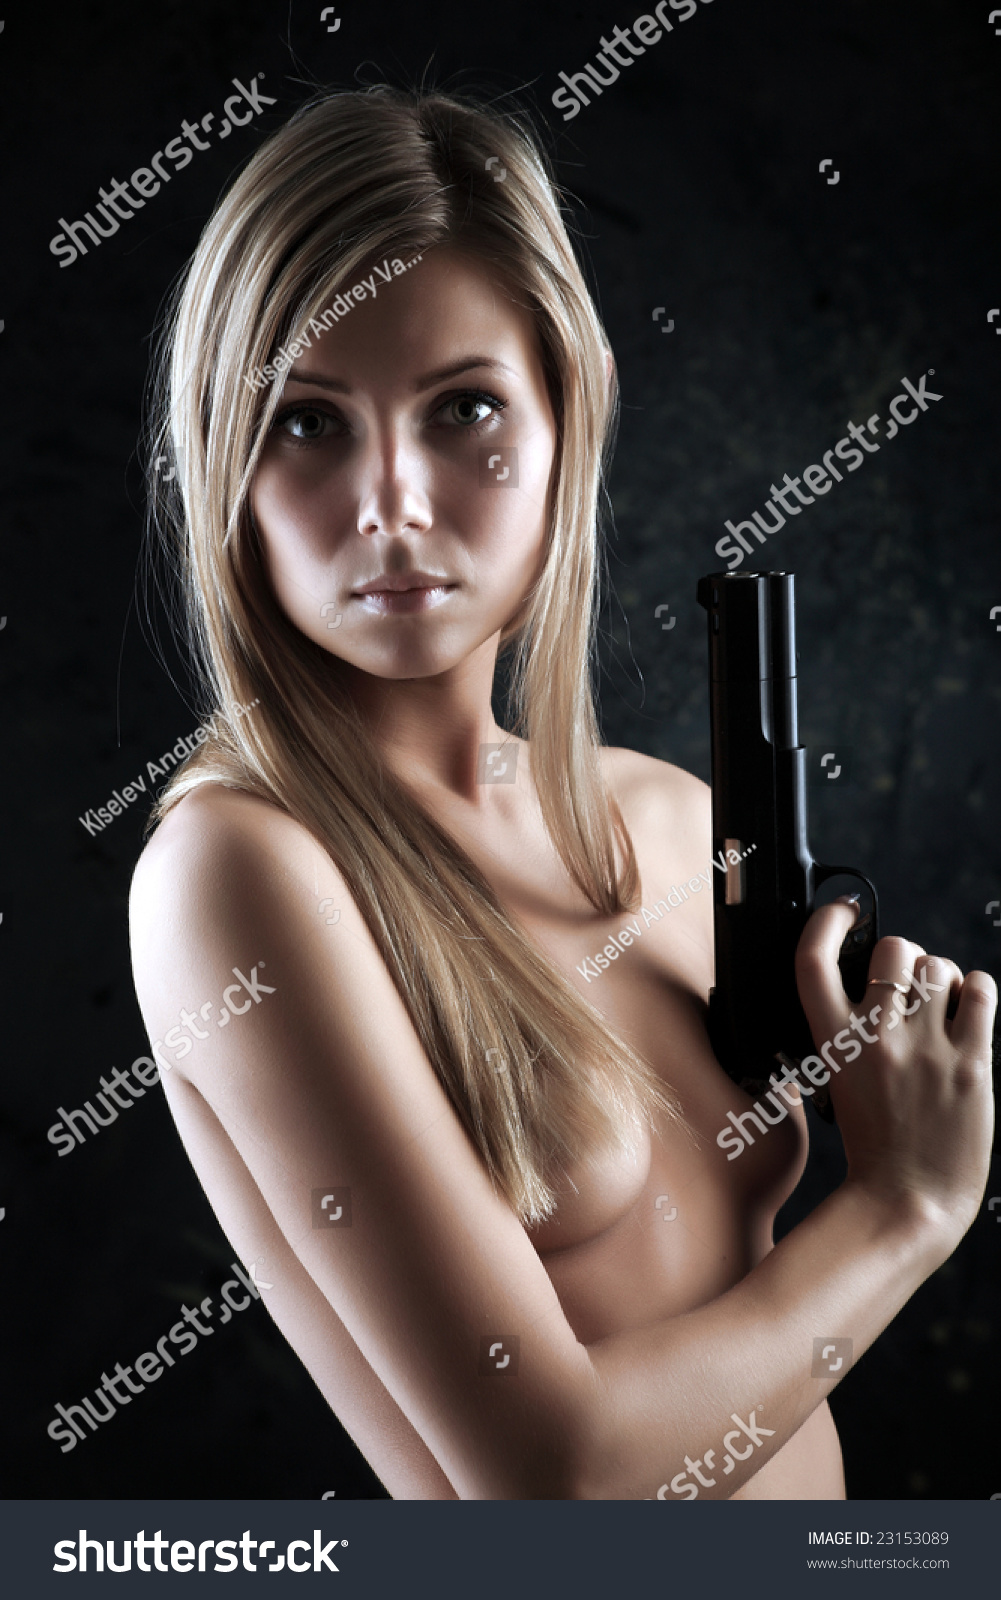 Naked Girls And Guns